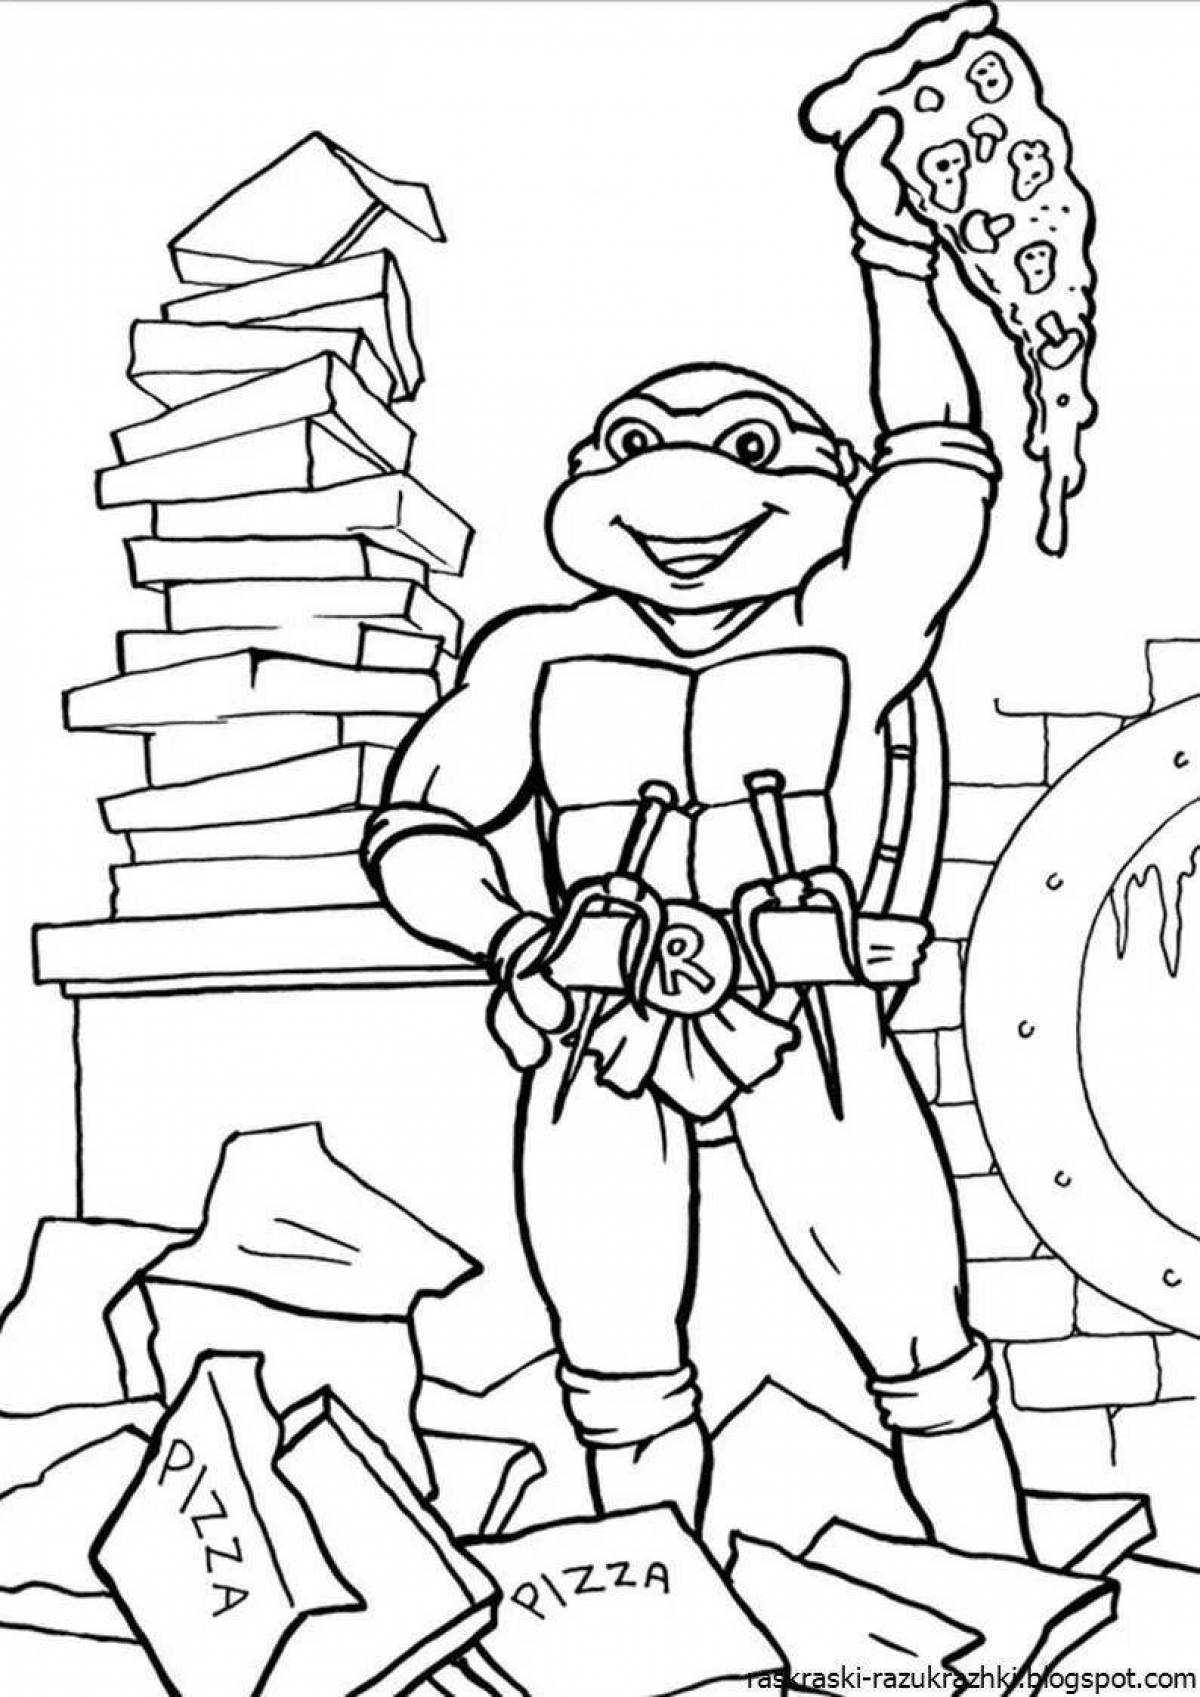 Colorful Teenage Mutant Ninja Turtles coloring pages for preschoolers